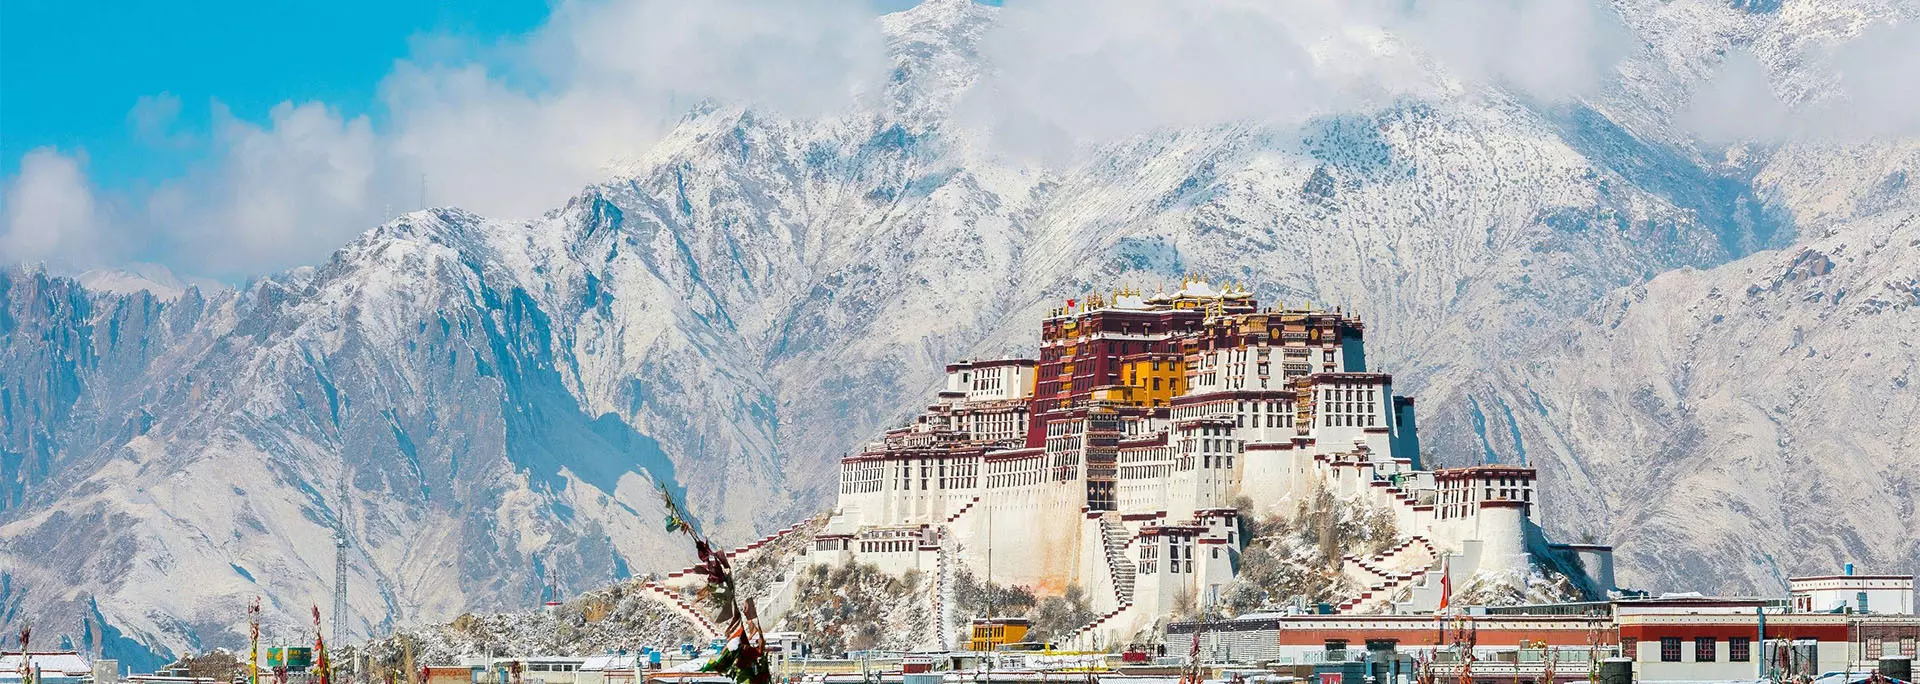 Potala Palace, landmark of Lhasa.